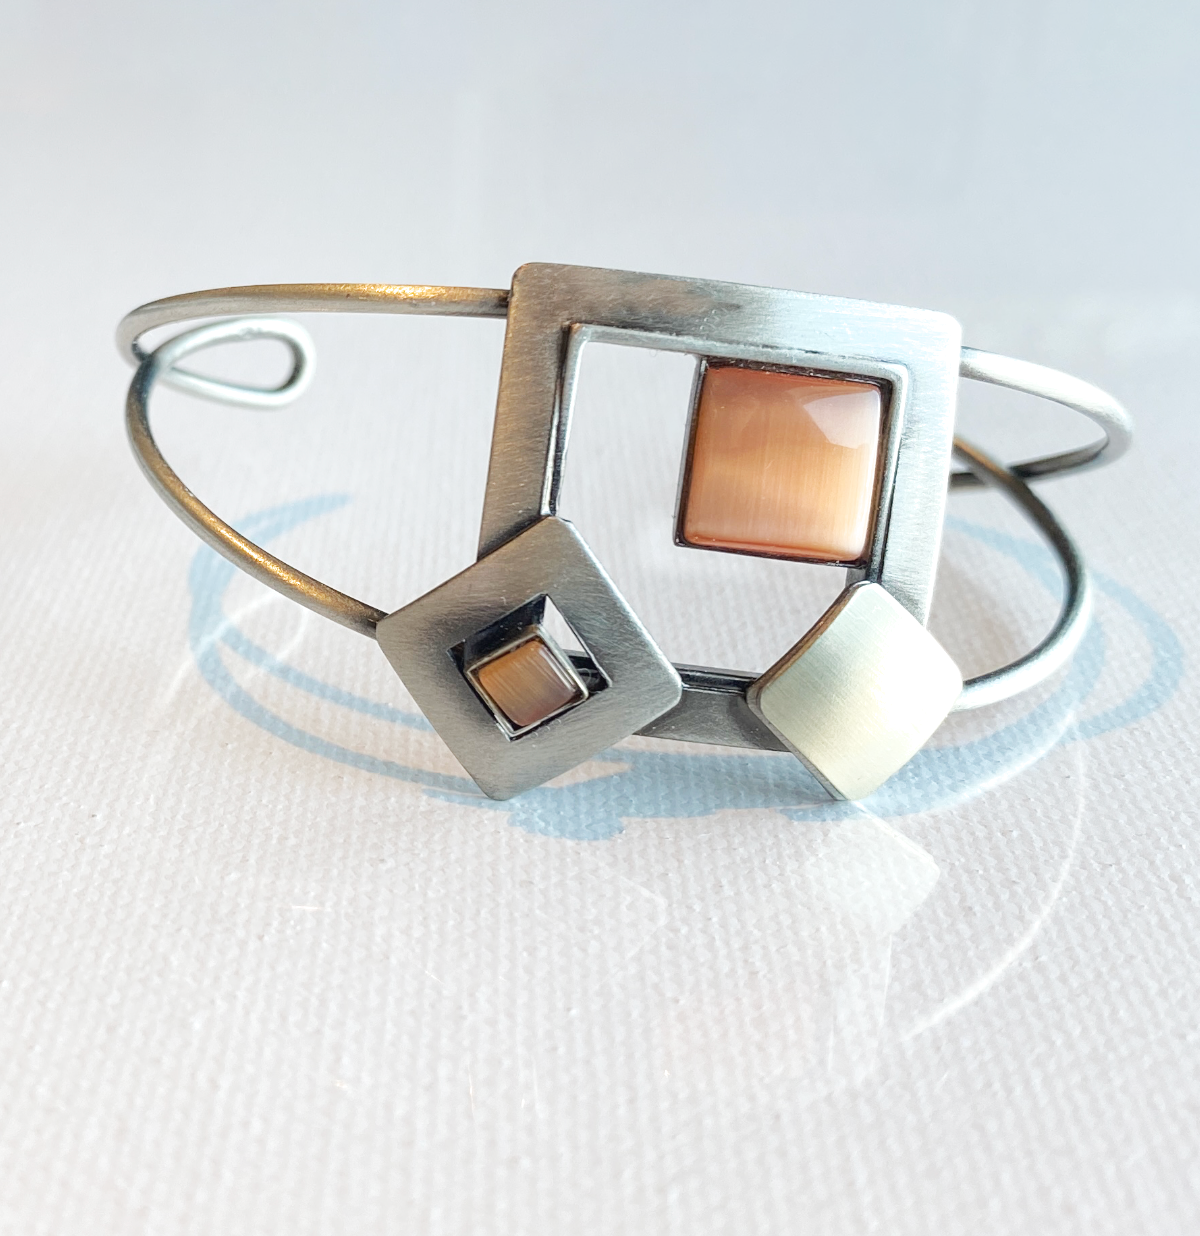 Christophe Poly Cuffs - Small - Orange squares - Brainchild Designs